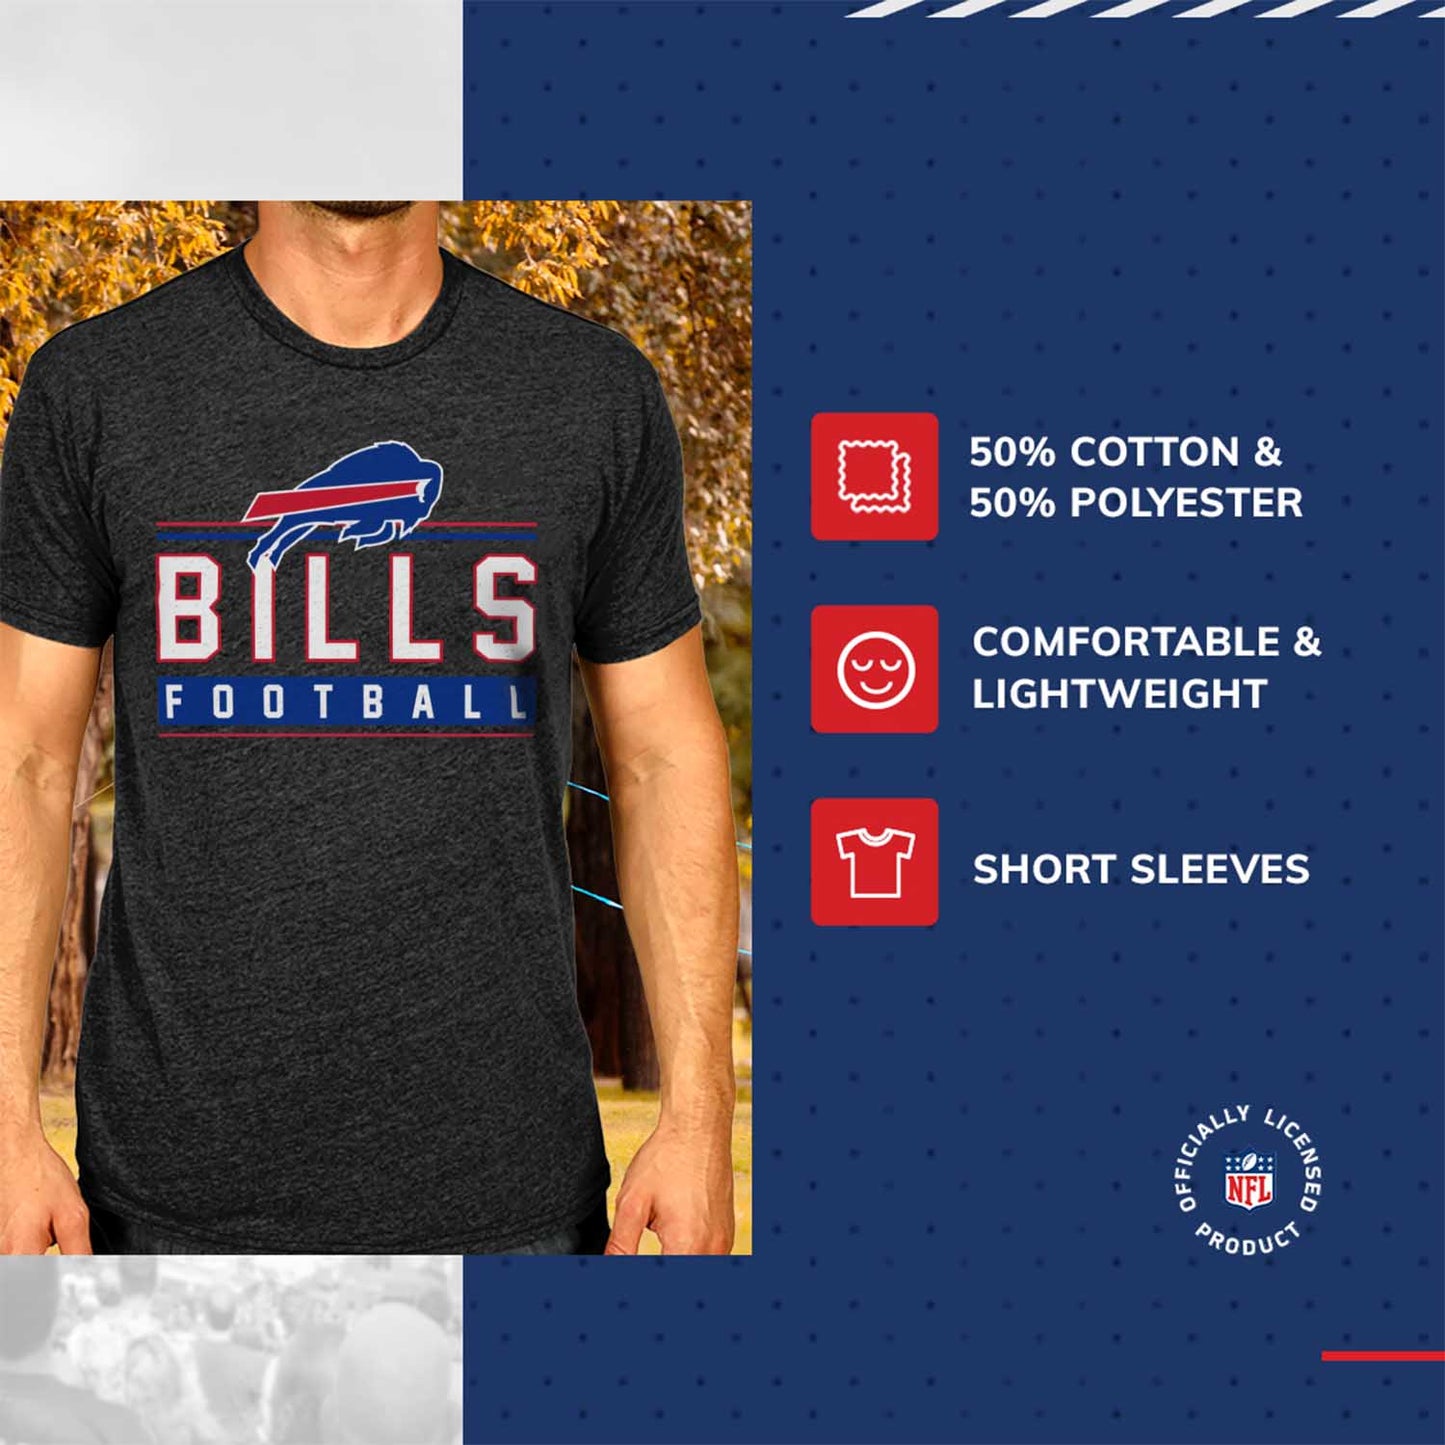 Buffalo Bills NFL Adult MVP True Fan T-Shirt - Charcoal